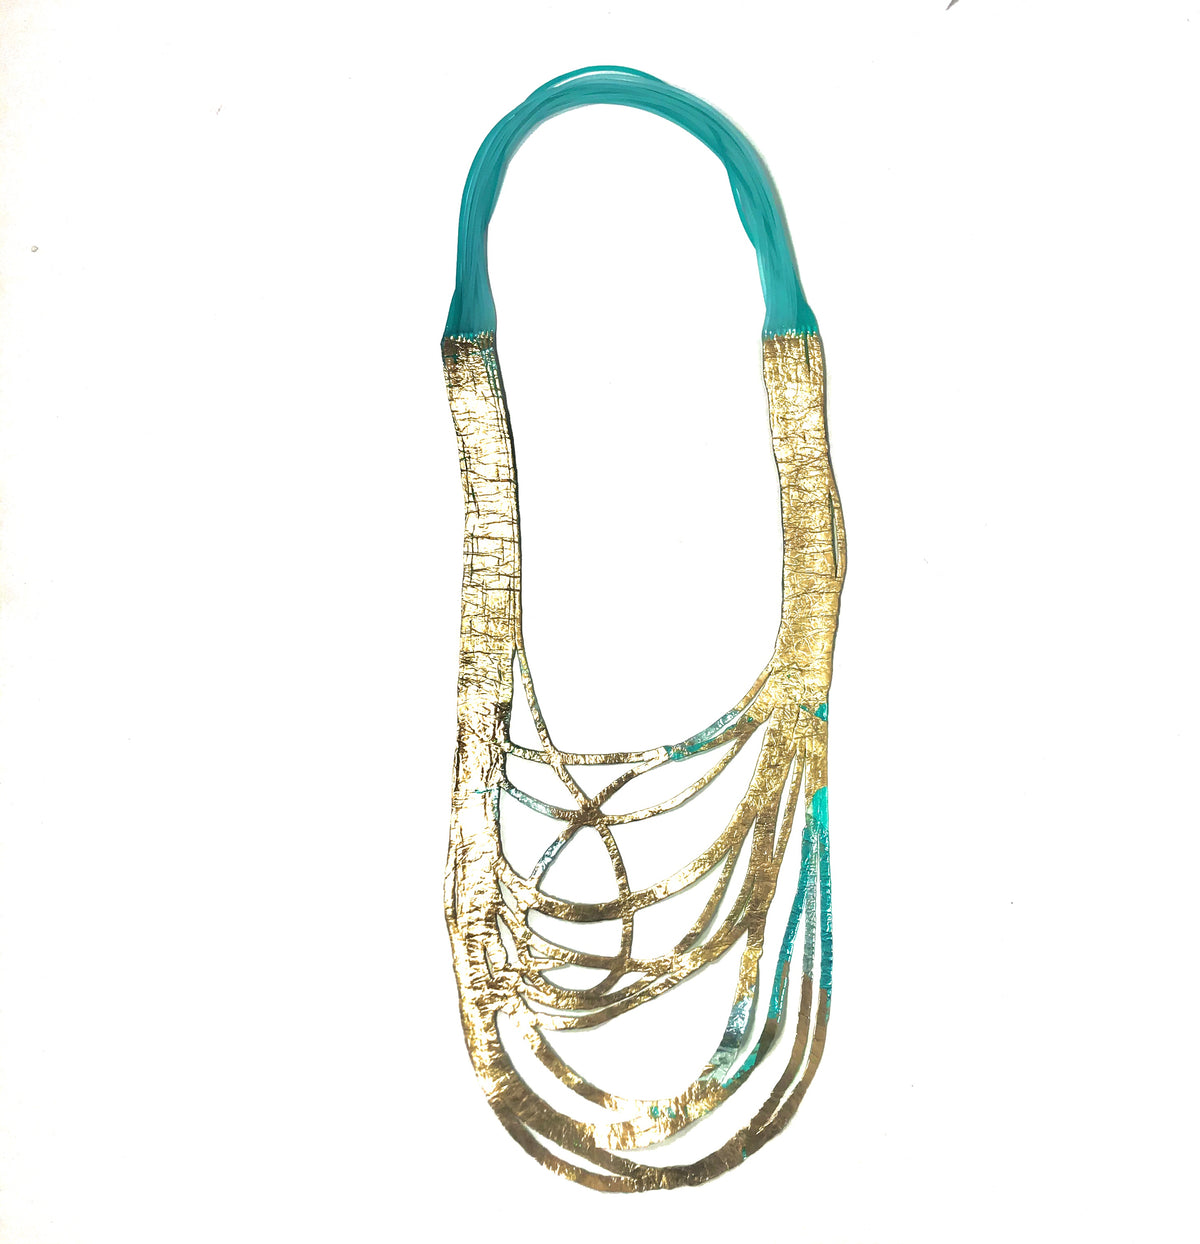 Sabato Isabel, SI01 Turquoise/Aqua Long Necklace - Tiffany Treloar